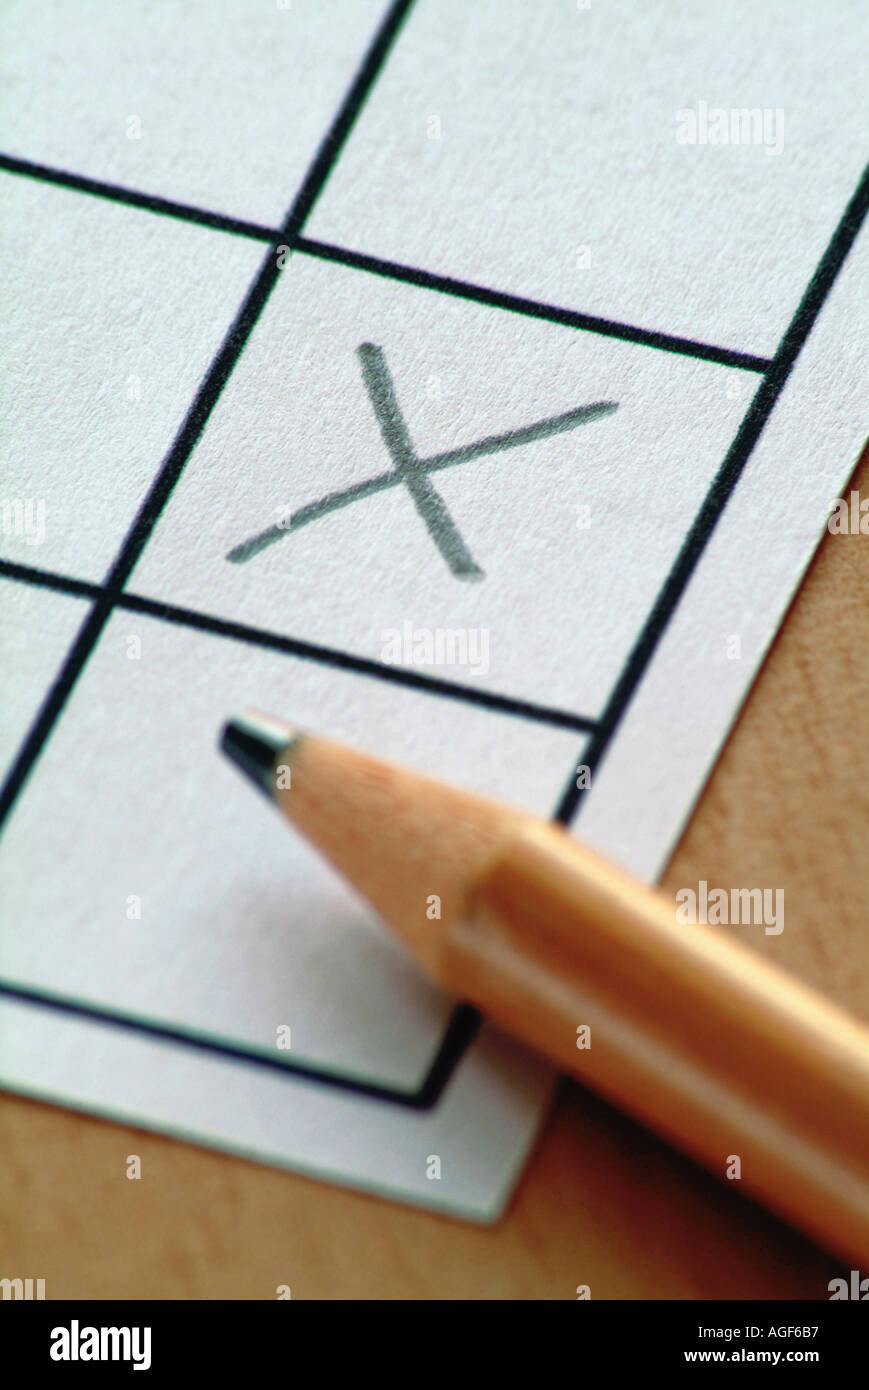 Pointe de crayon de mettre un x sur un bulletin de vote Banque D'Images